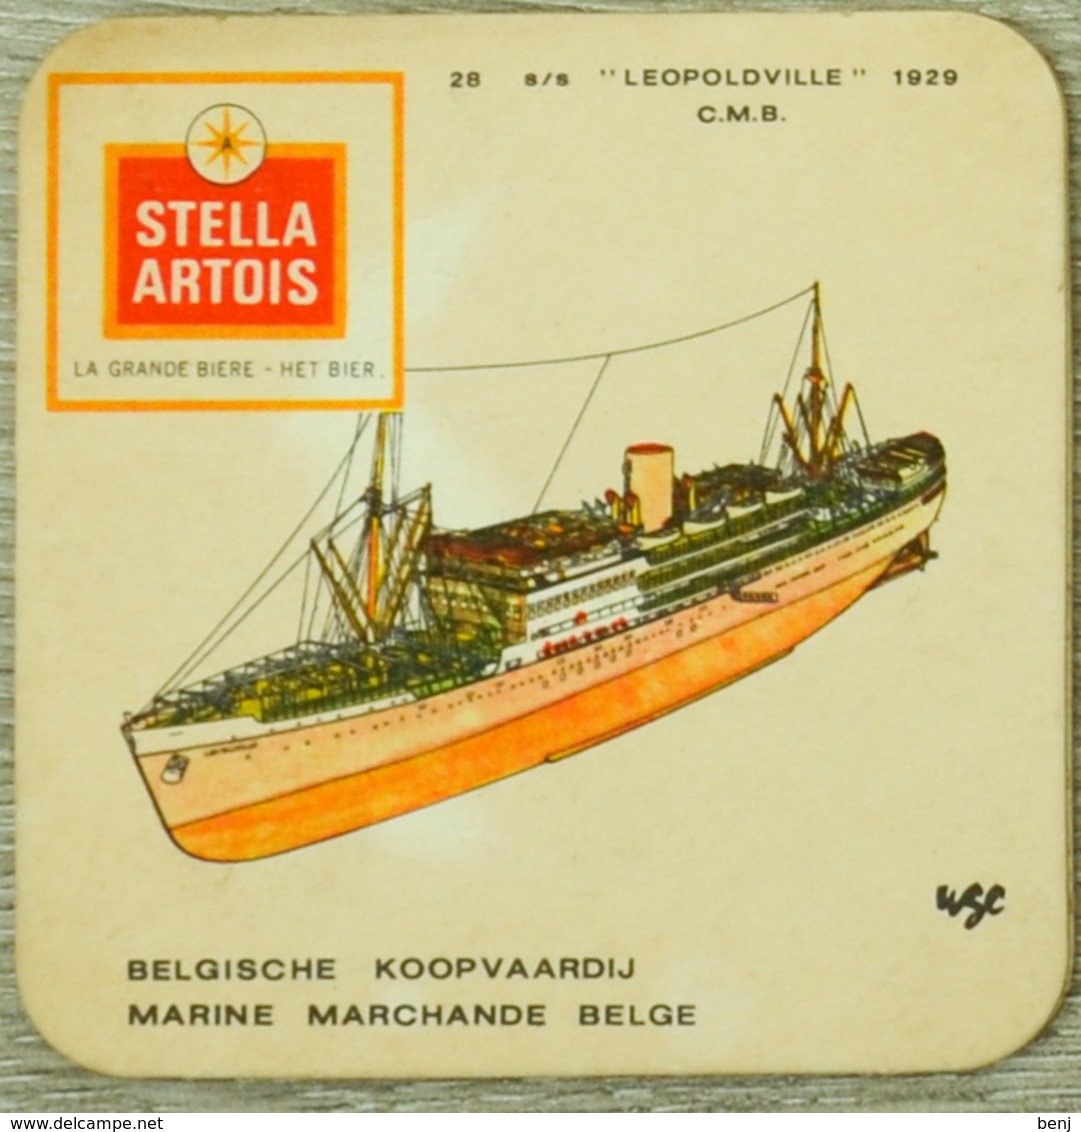 Sous-bock STELLA ARTOIS Marine Marchande Belgique Belgie Koopvaardij 28 Leopoldville 1929 CMB Bateau (CX) - Sous-bocks